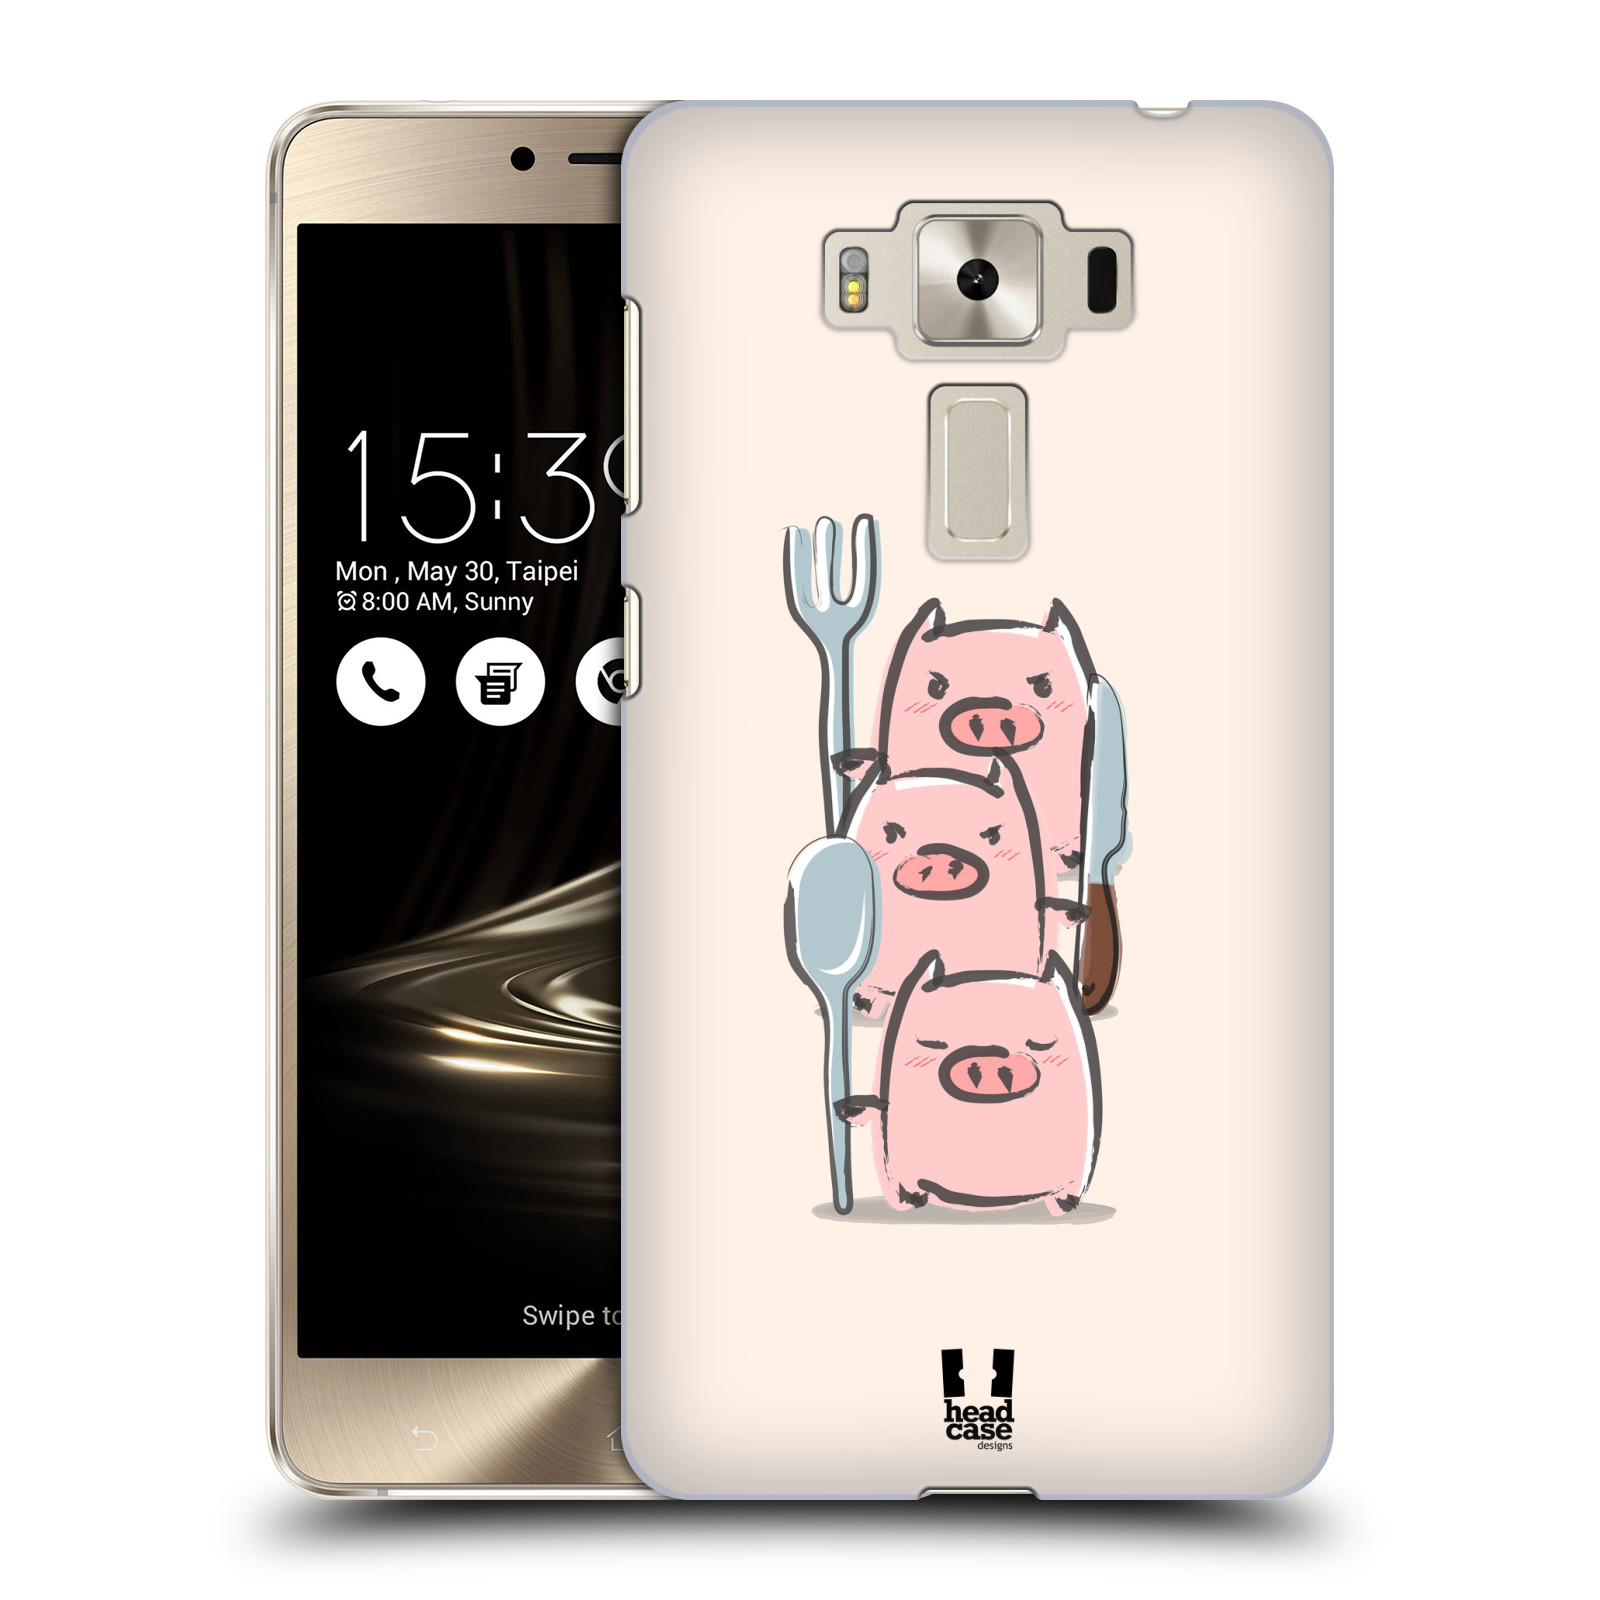 HEAD CASE plastový obal na mobil Asus Zenfone 3 DELUXE ZS550KL vzor roztomilé růžové prasátko hladovci